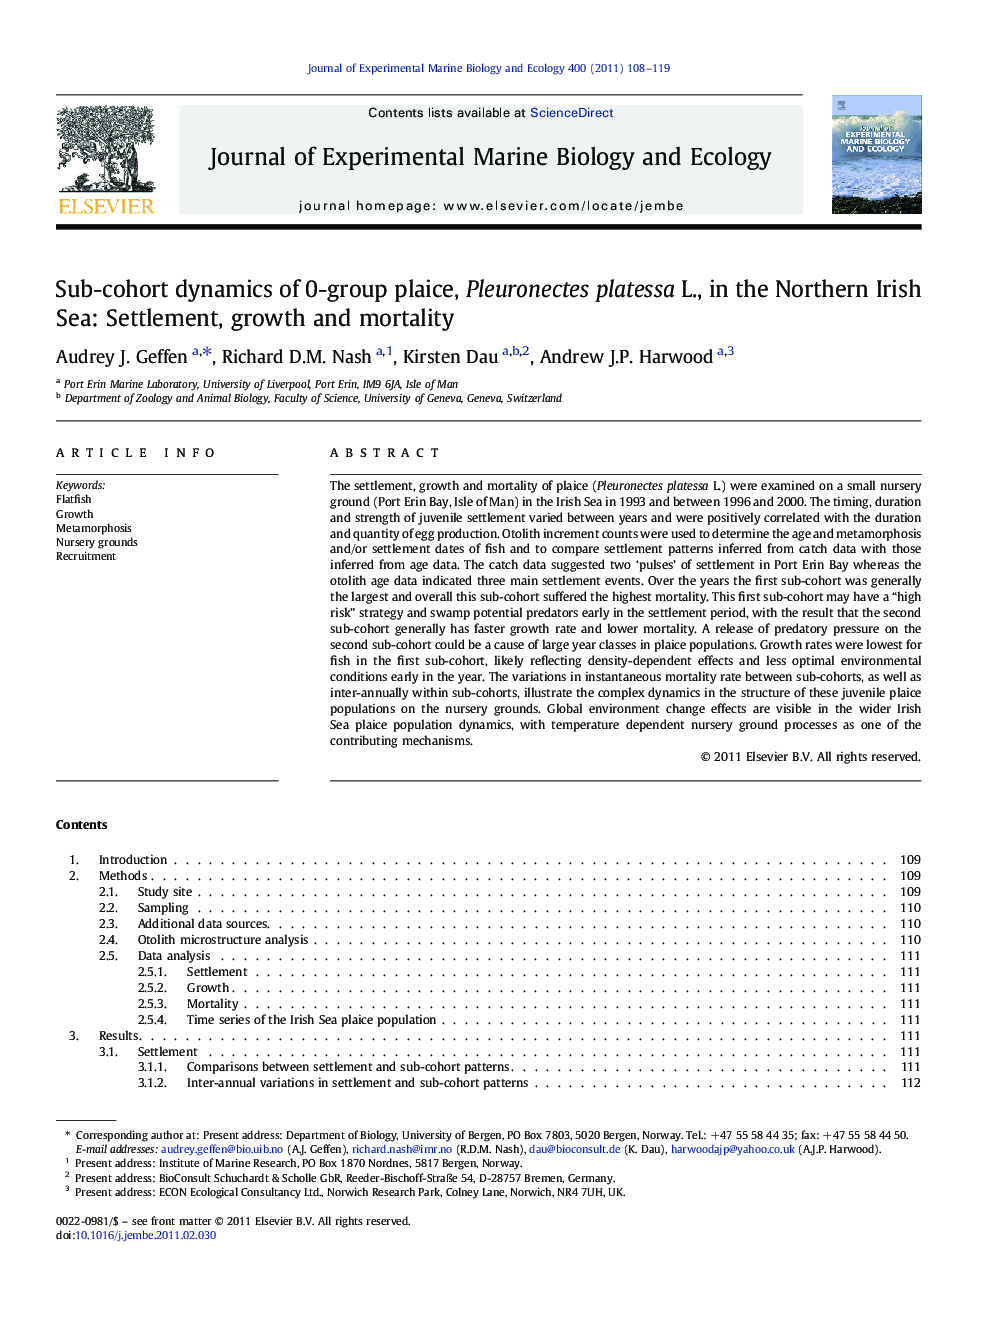 Sub-cohort dynamics of 0-group plaice, Pleuronectes platessa L., in the Northern Irish Sea: Settlement, growth and mortality